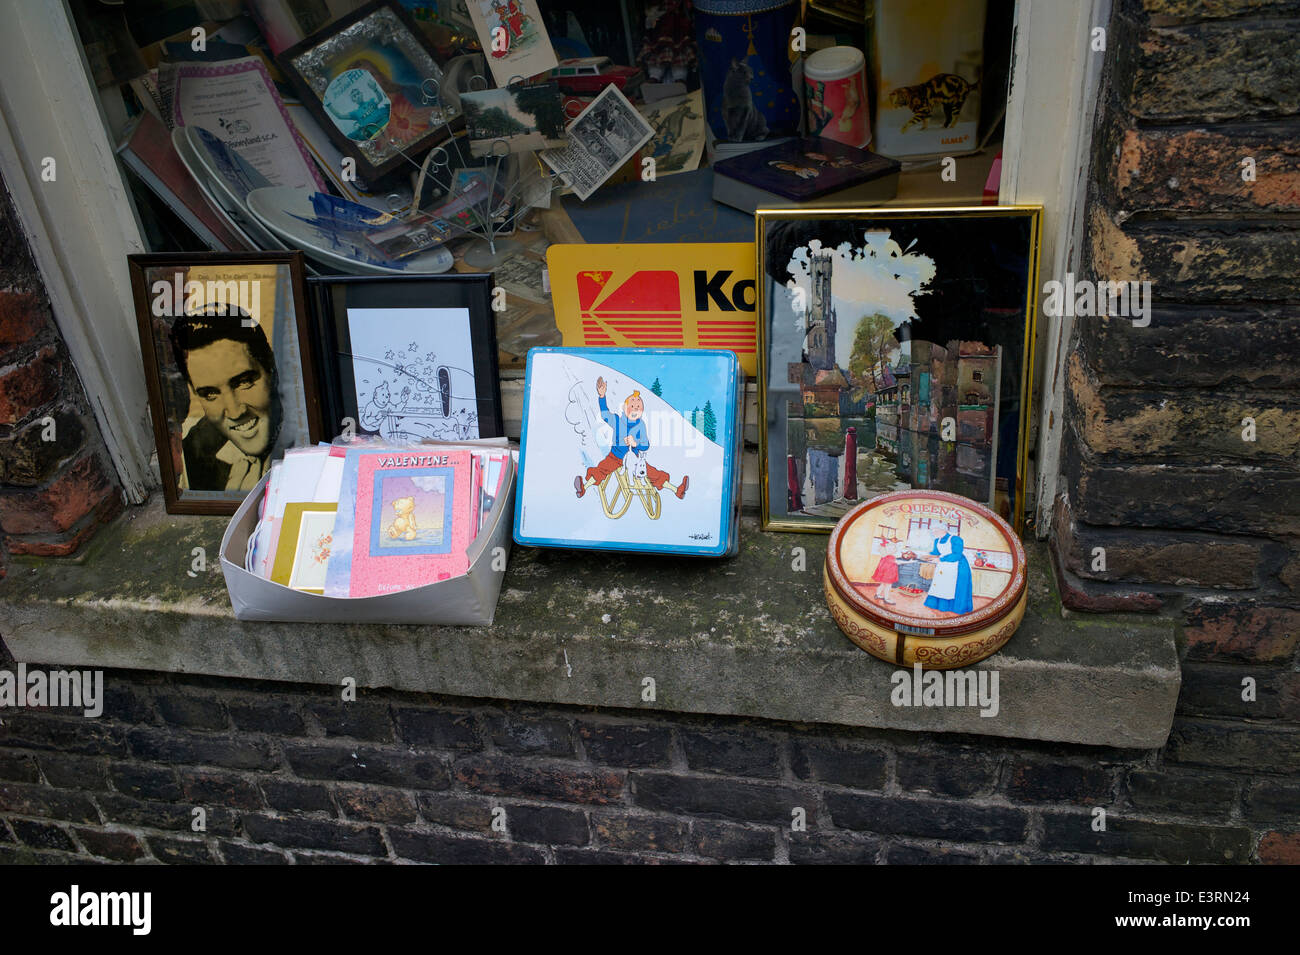 Tintin memorabilia amongst bric a brac, Bruges, Belgium Stock Photo